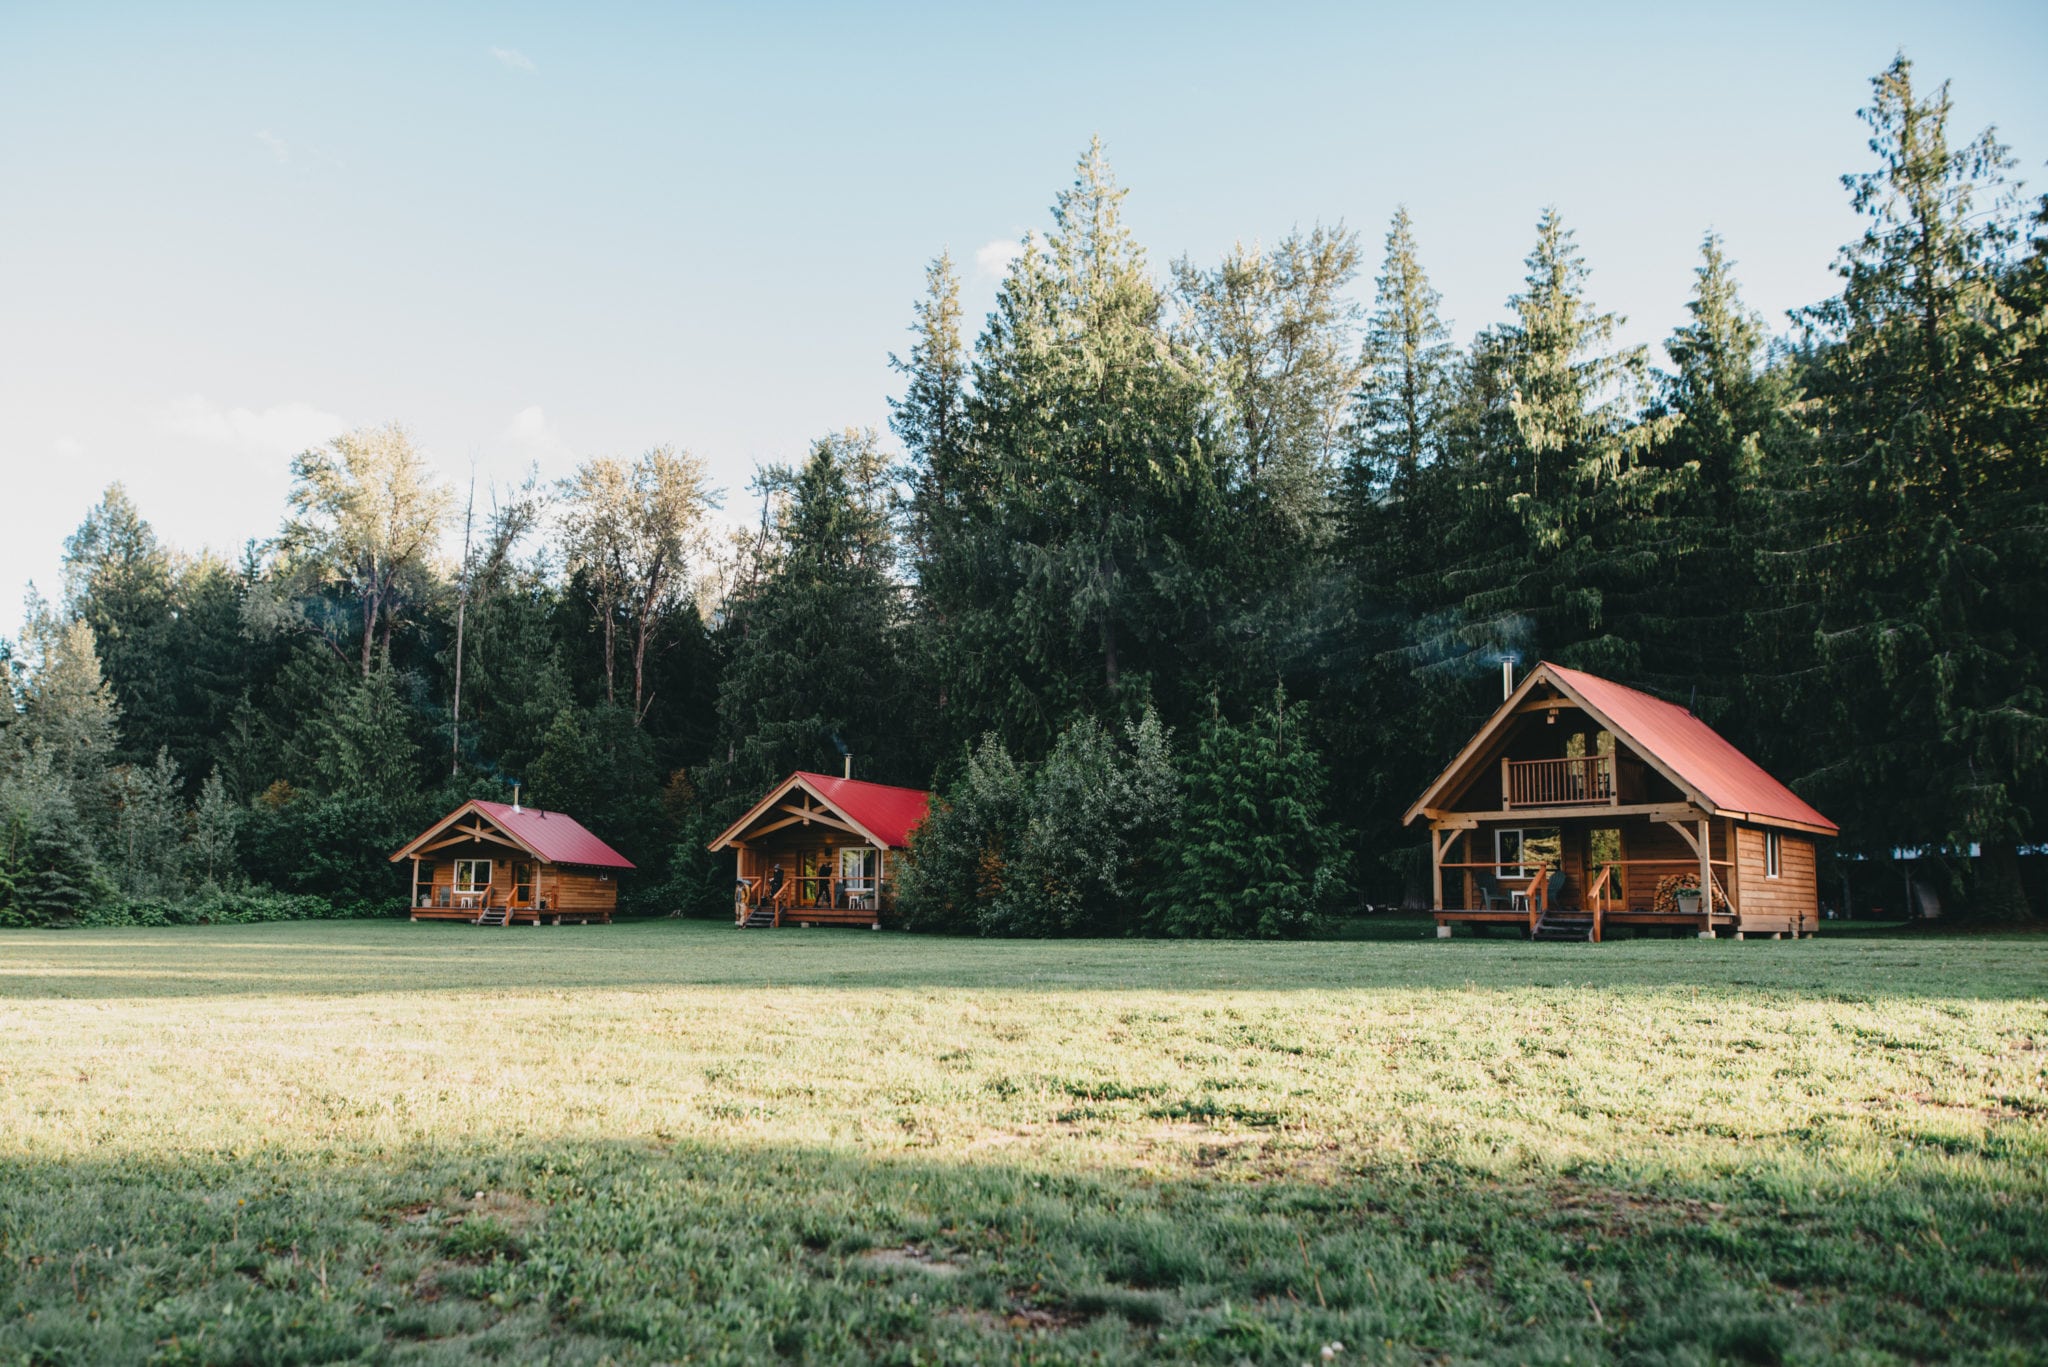 Three of the cabins at Wild Bear Lodge